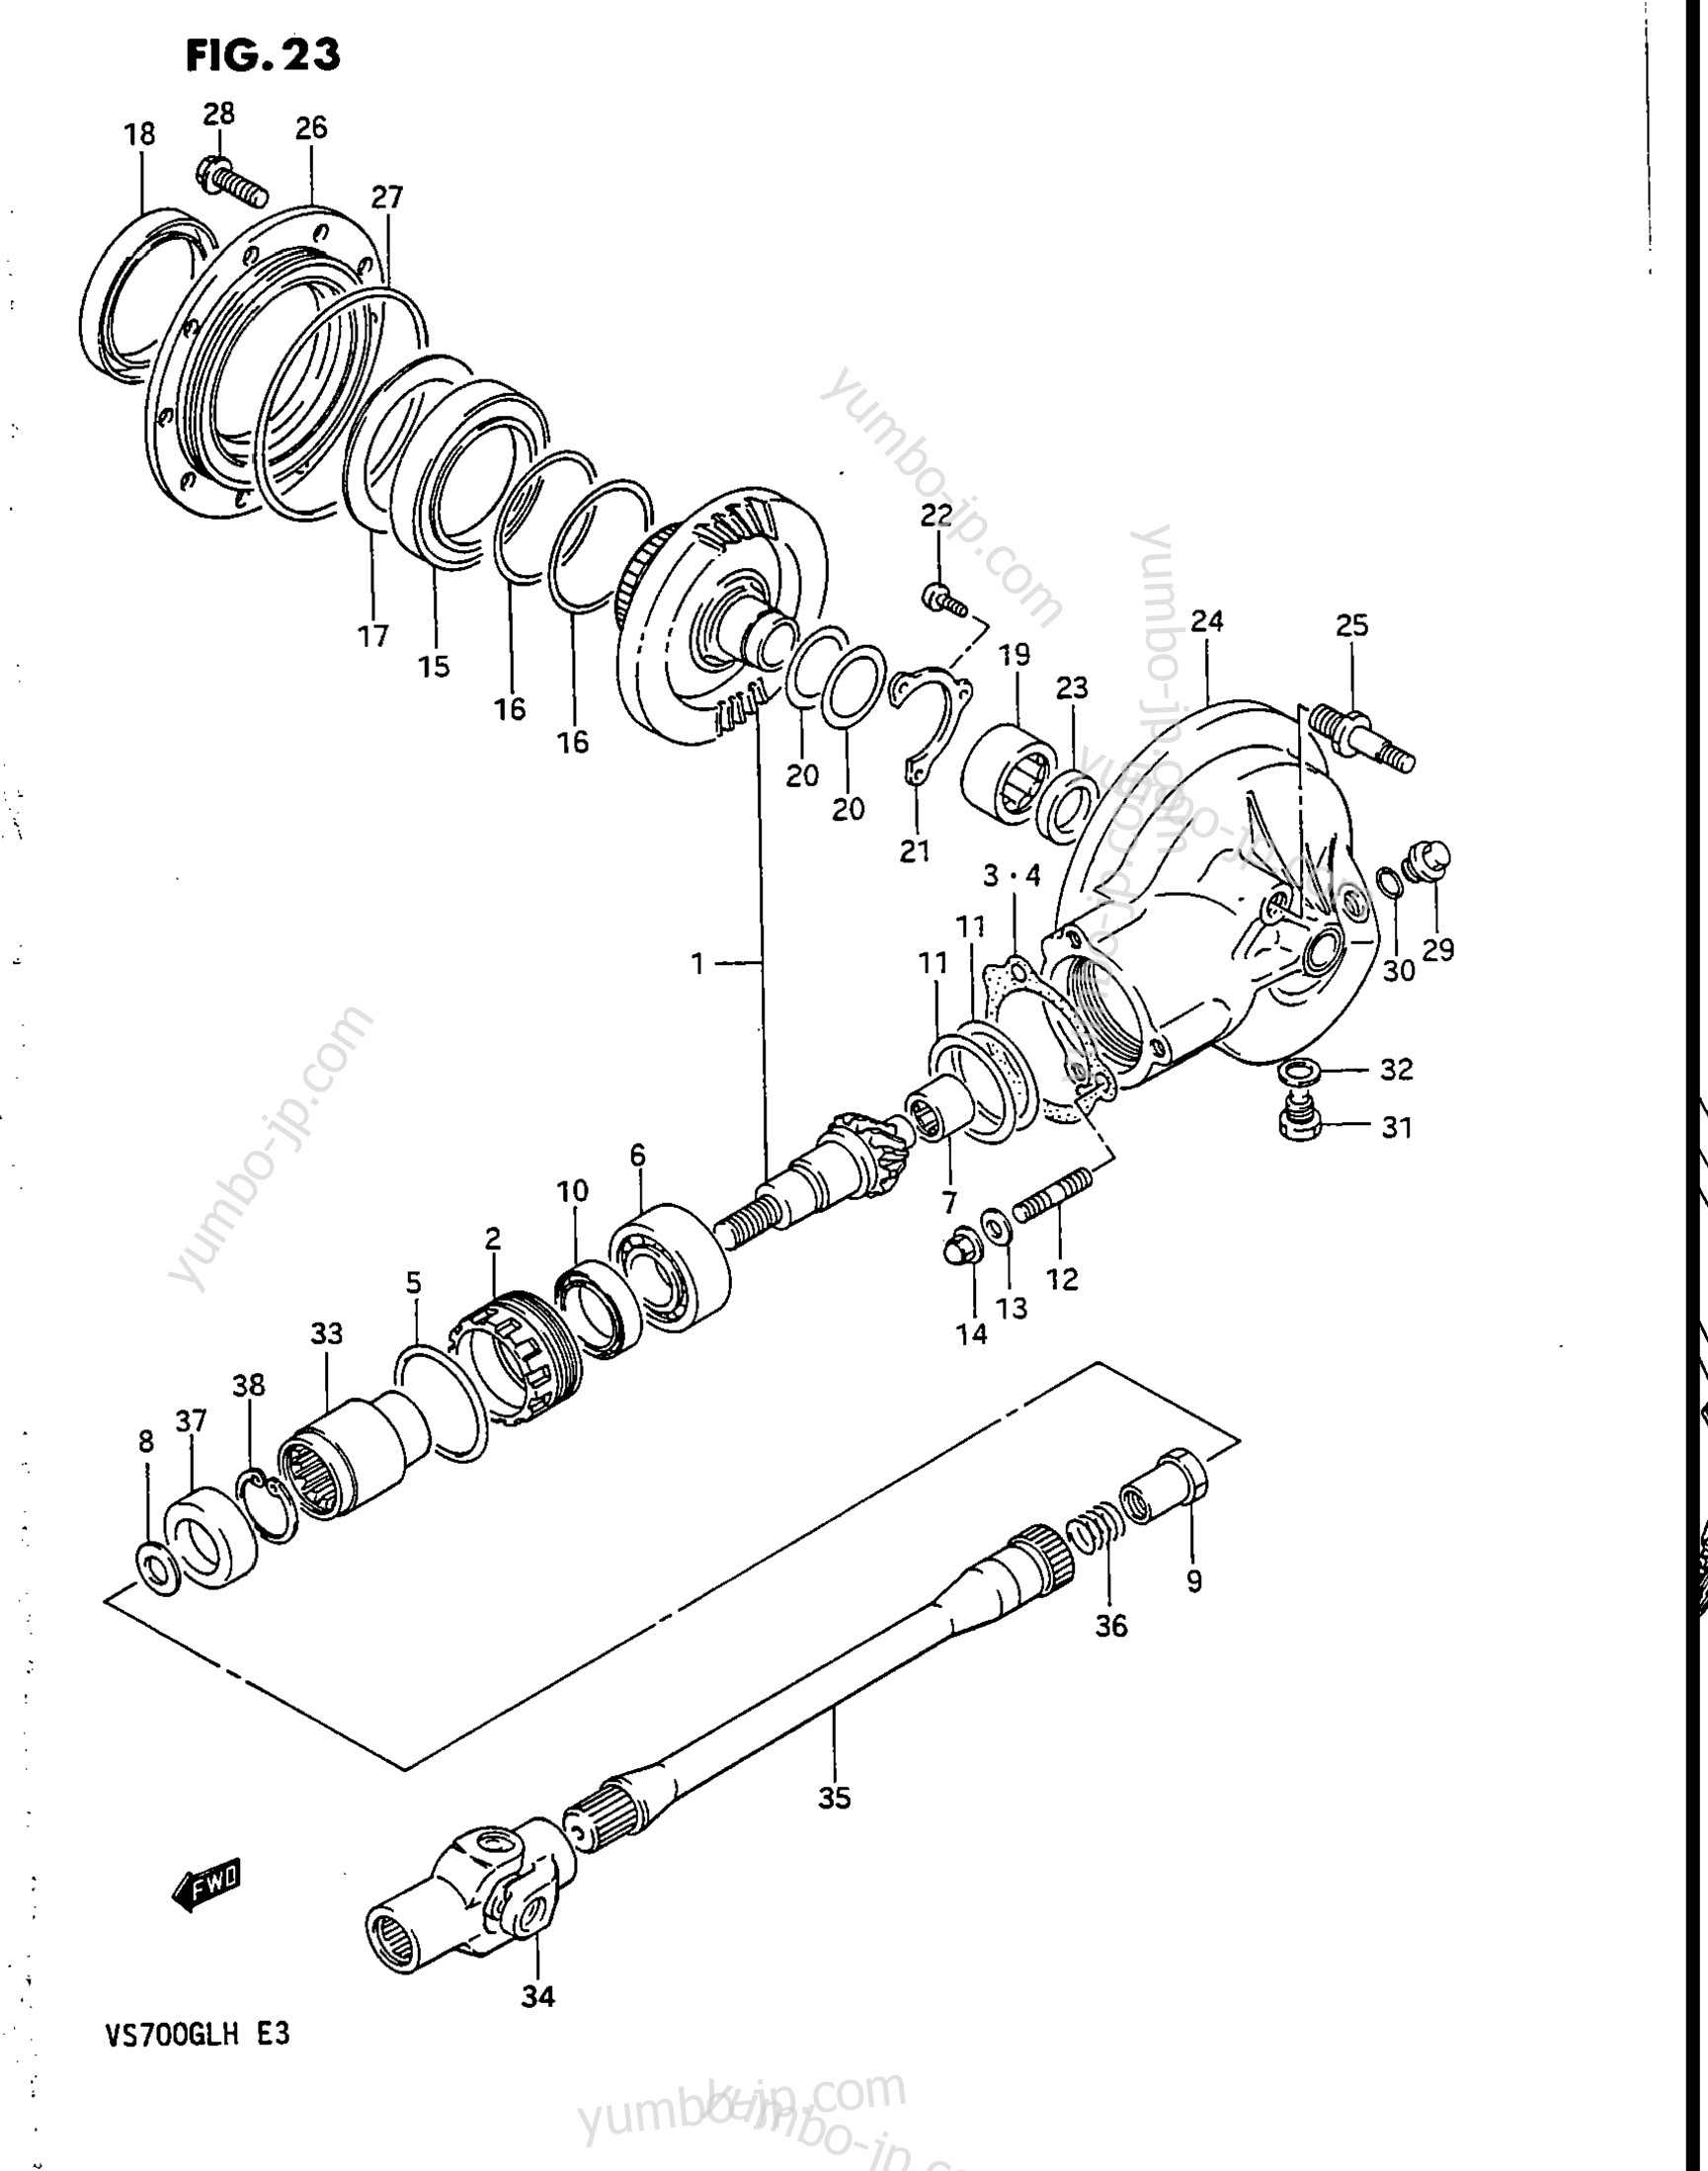 PROPELLER SHAFT - FINAL DRIVE GEAR for motorcycles SUZUKI Intruder (VS700GLEP) 1987 year